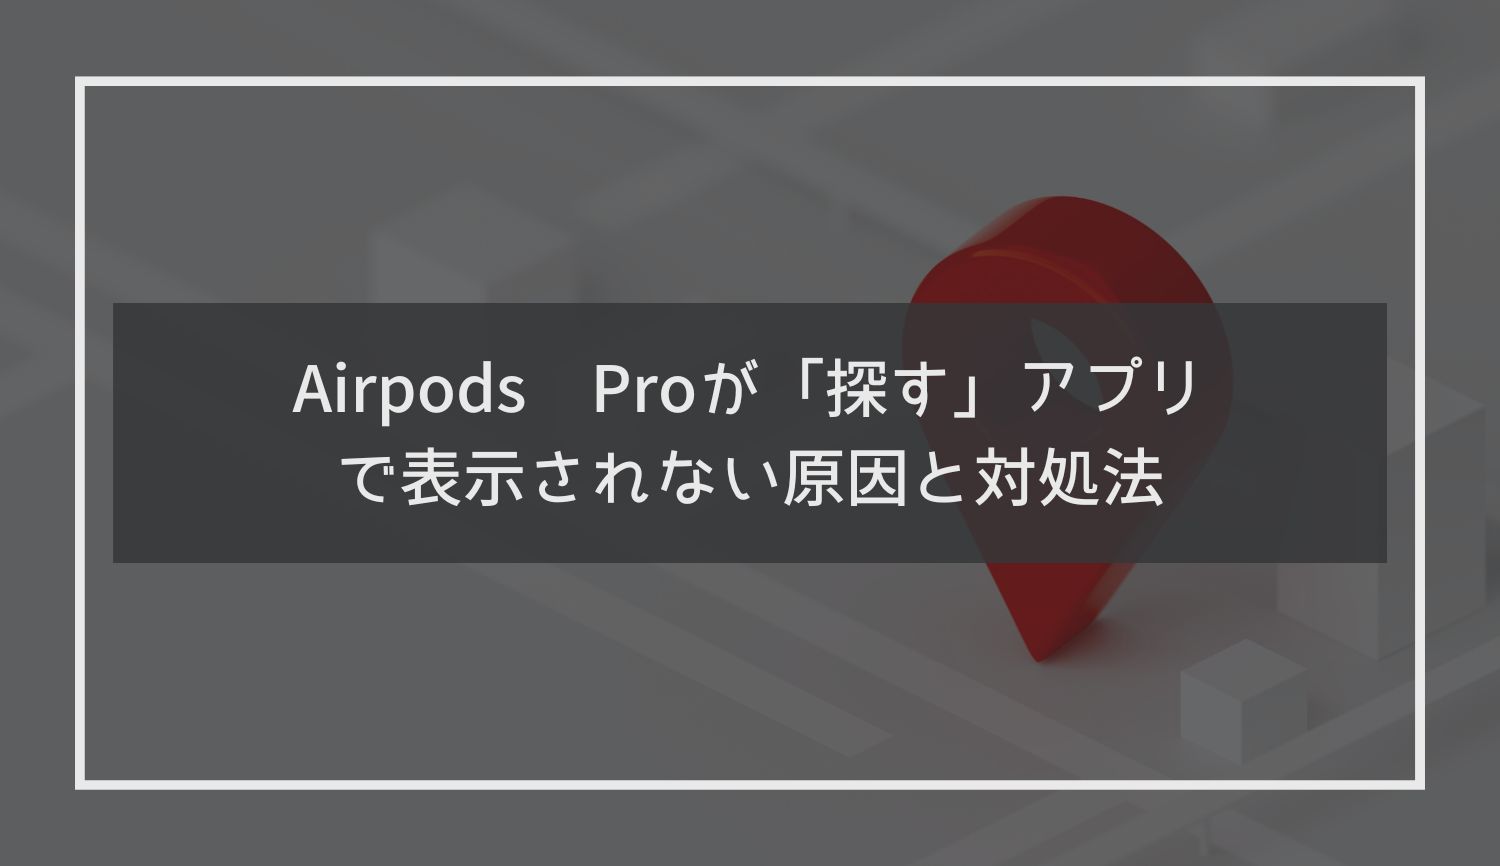 Airpods Proが「探す」アプリで表示されない原因と対処法